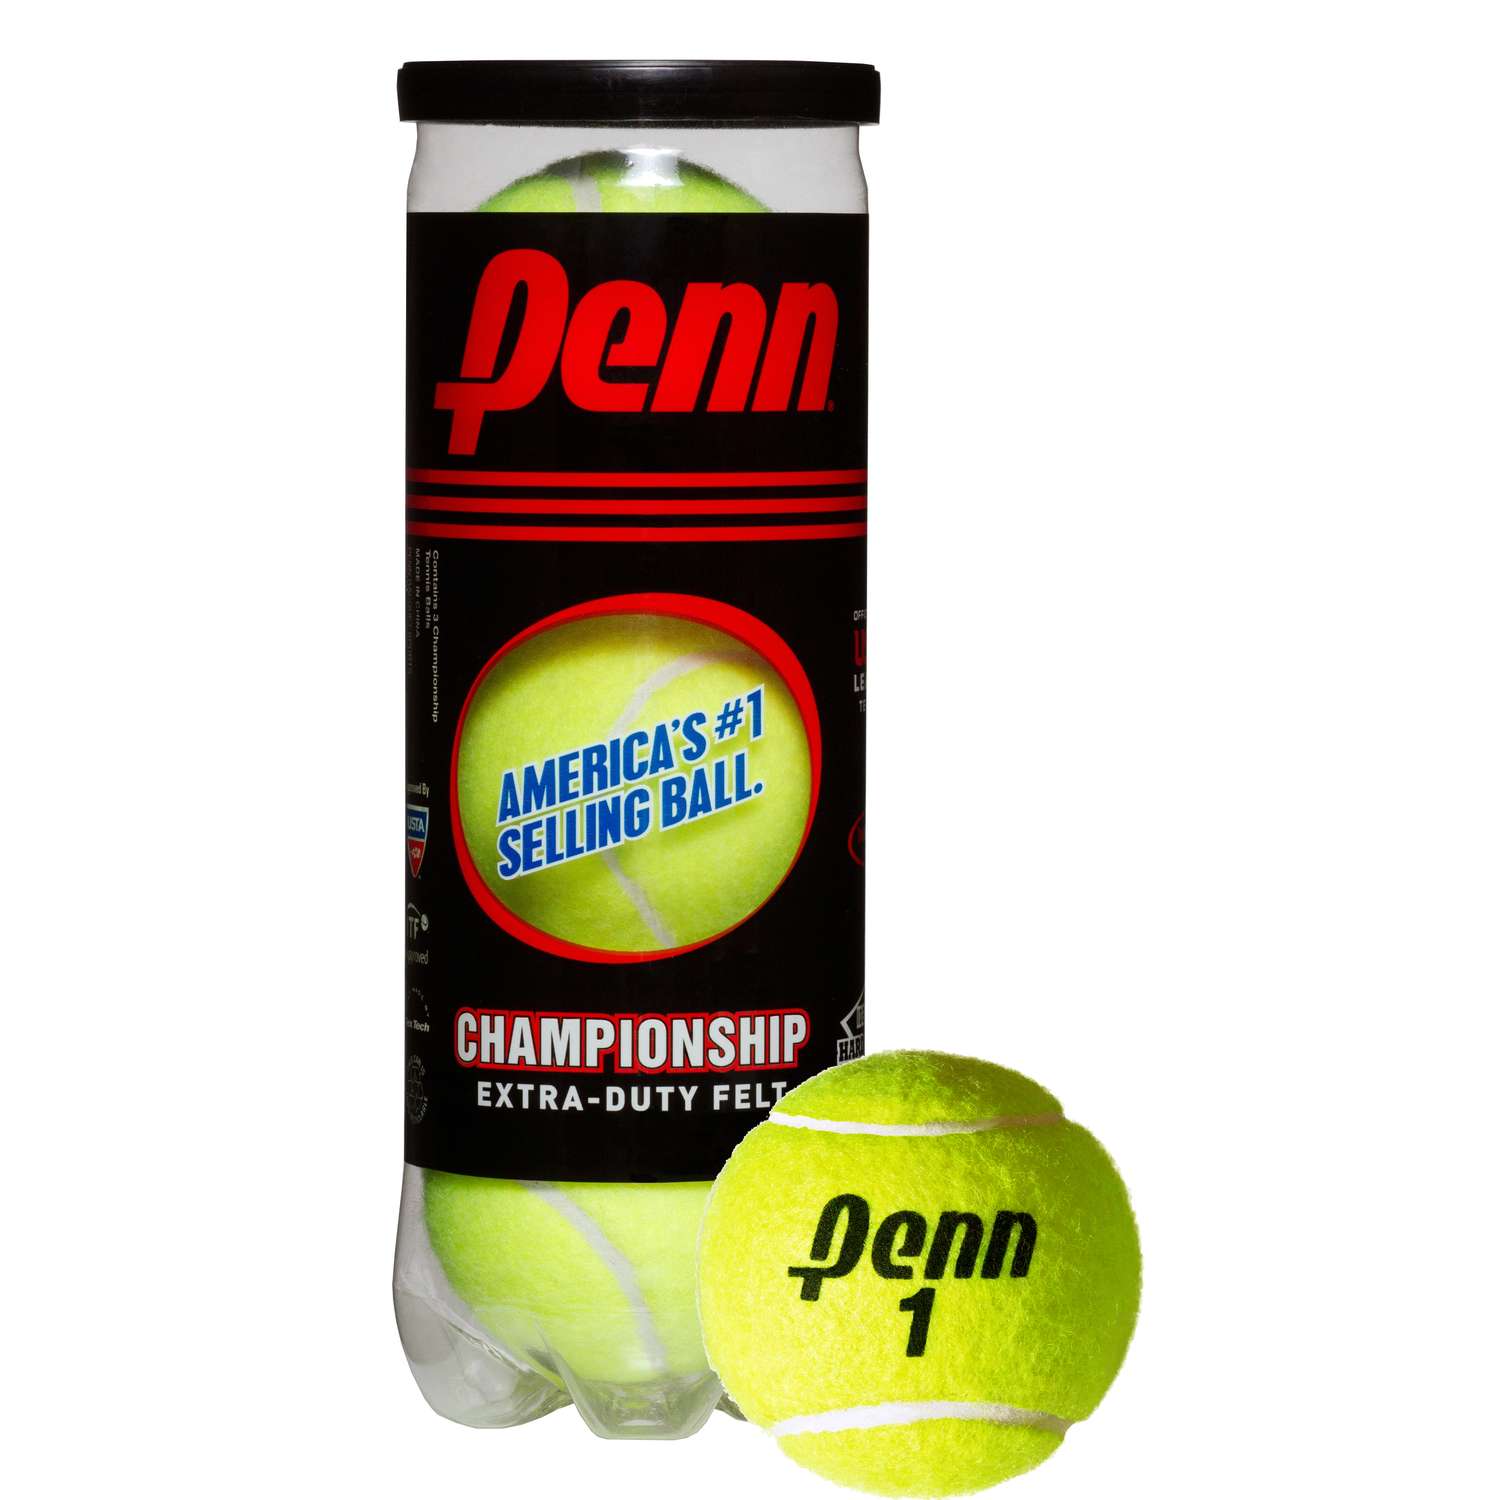 Penn Championship Extra Duty Felt Tennis Ball - 3 count